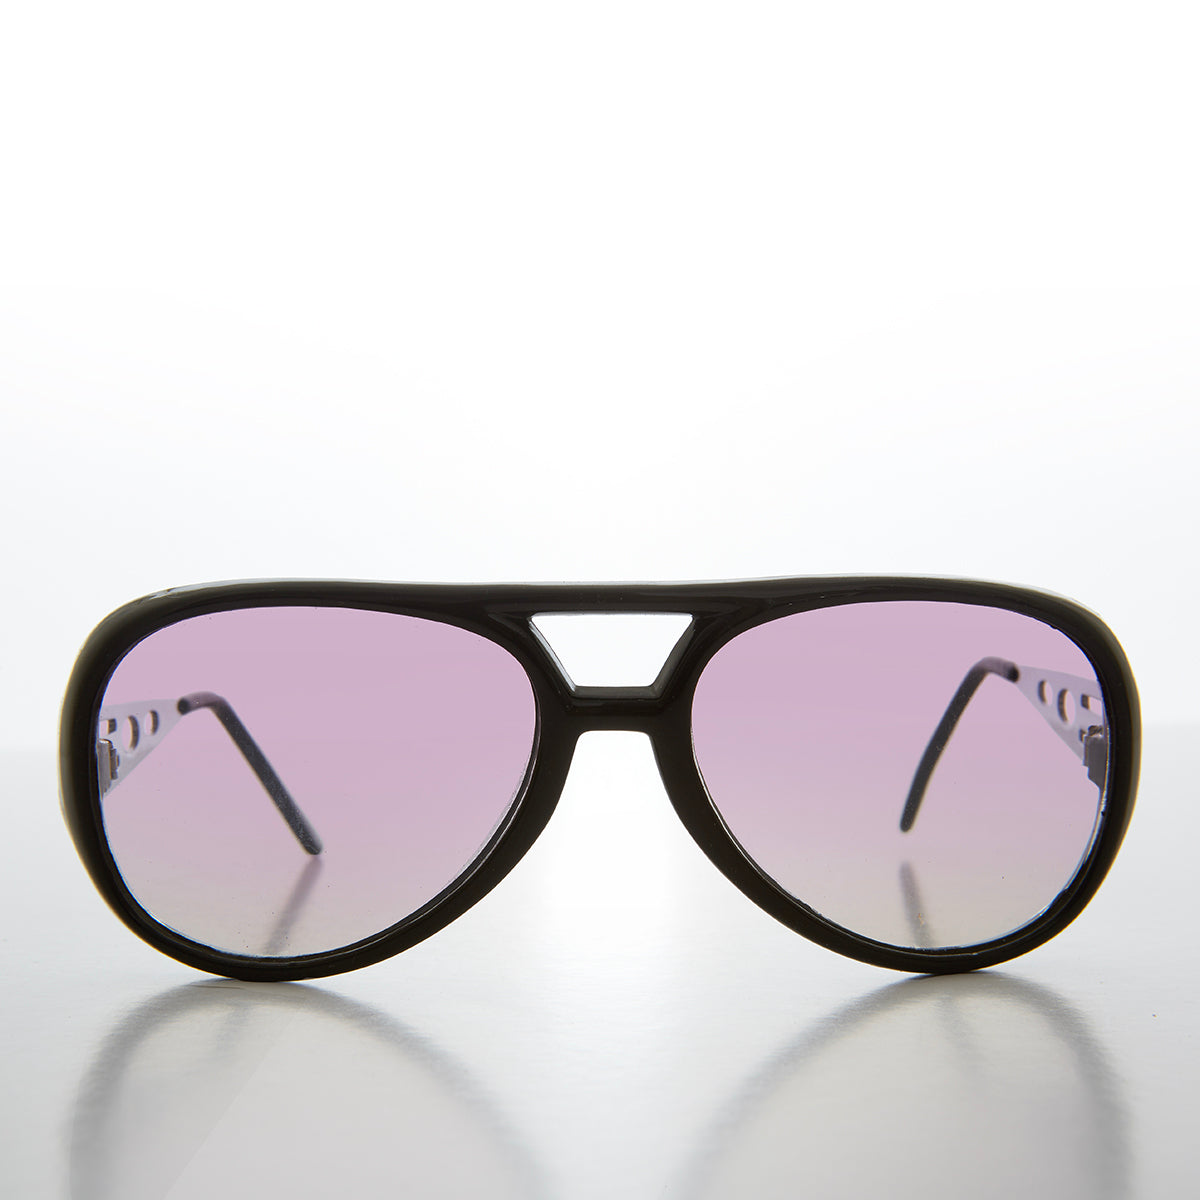 pilot sunglasses with purple lenses